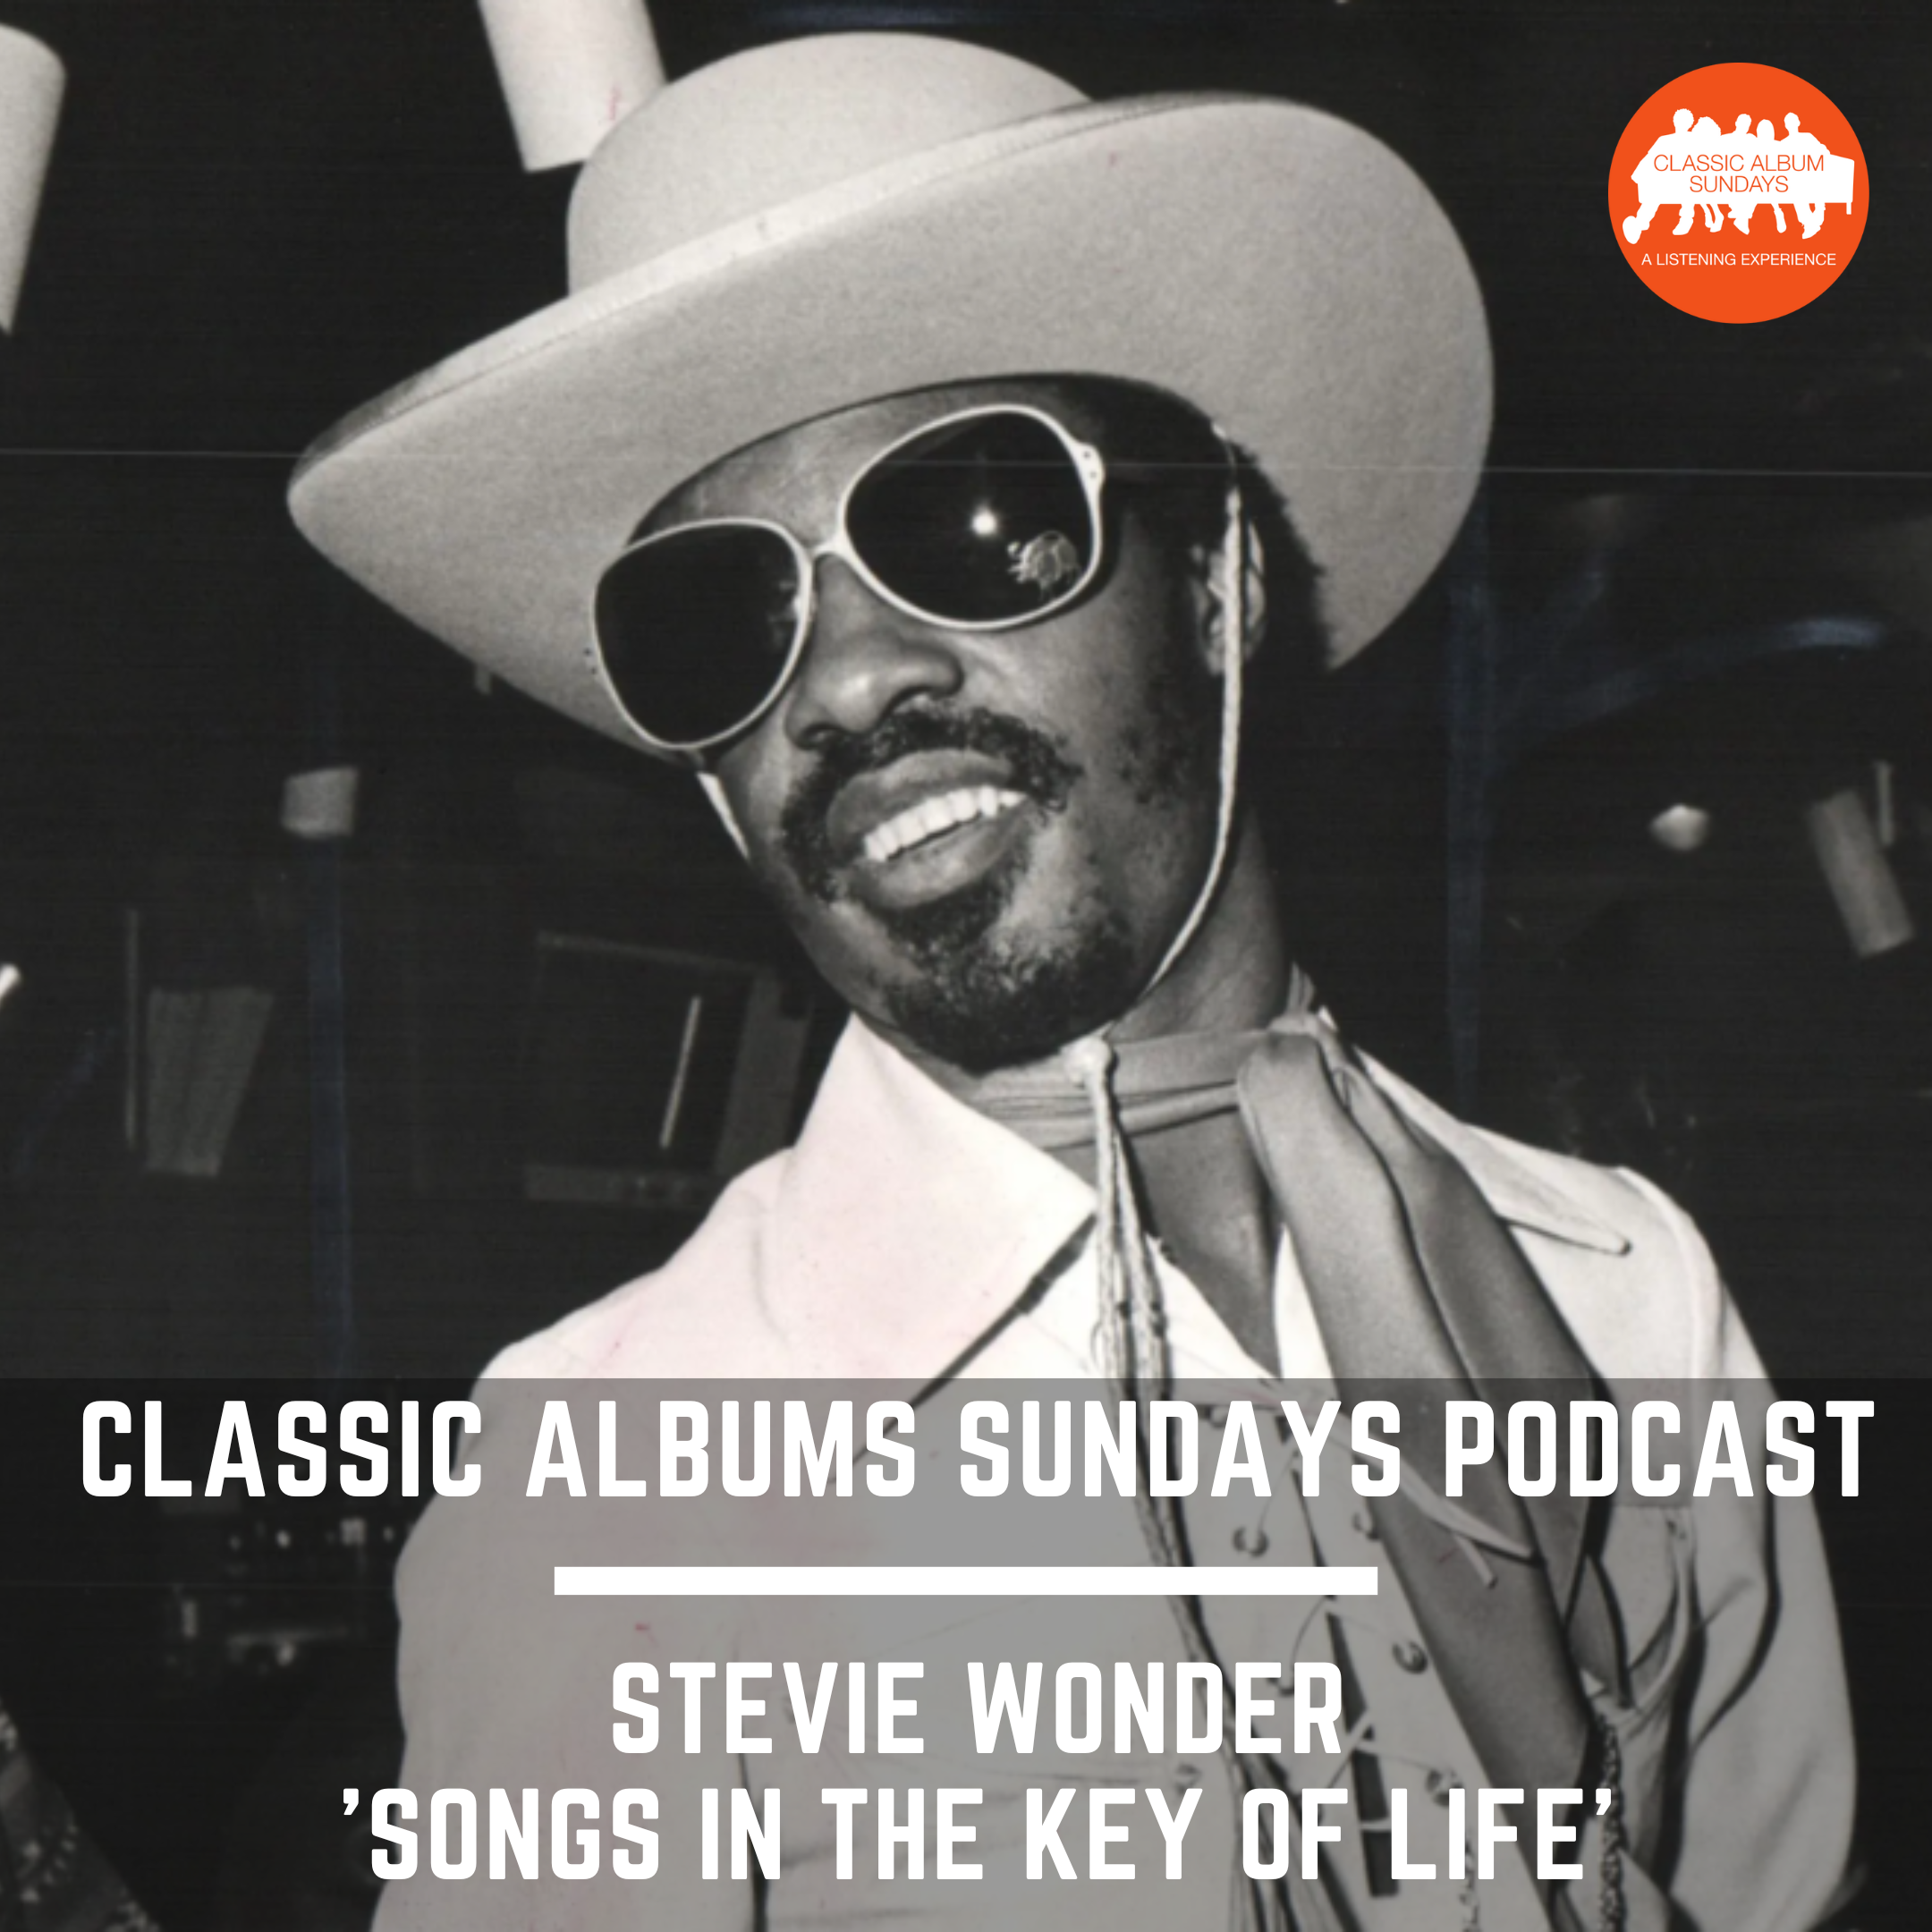 Classic Album Sundays Podcast: Stevie Wonder ‘Songs In The Key of Life’